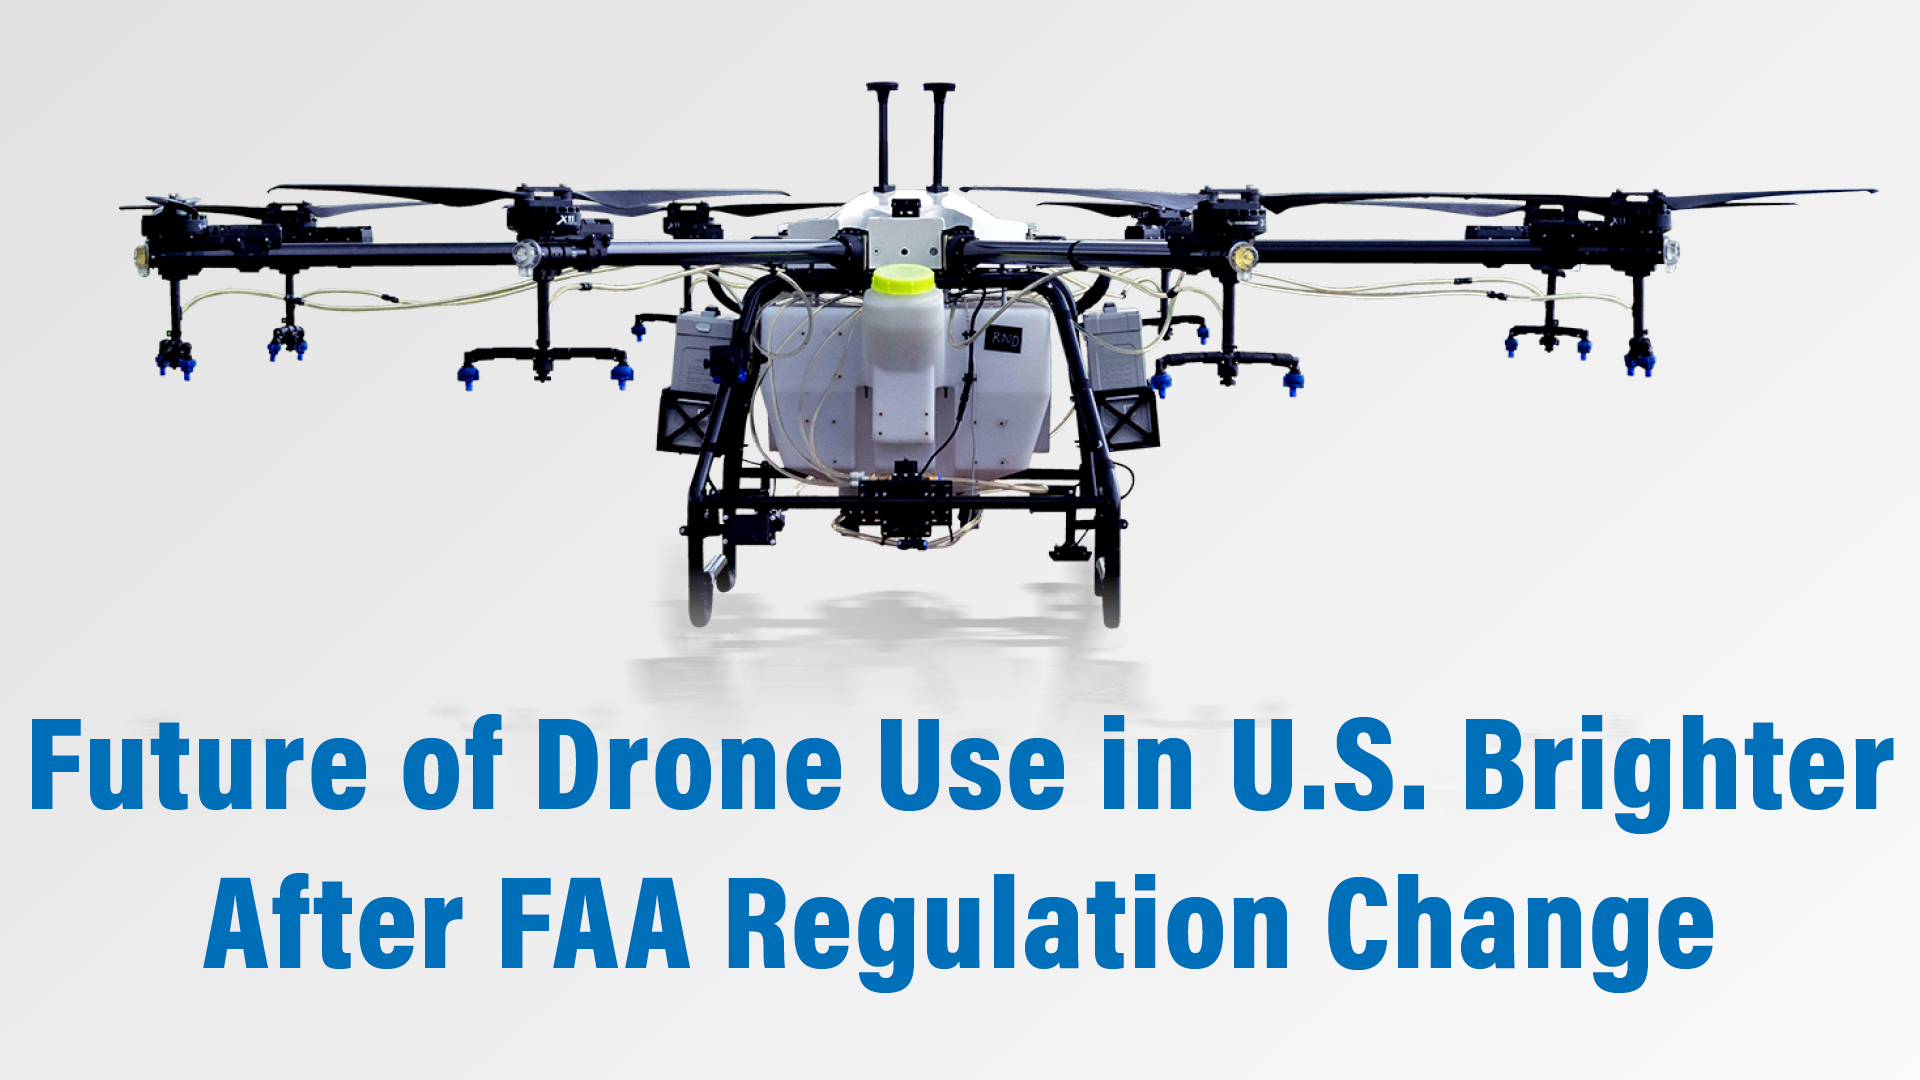 [Technology Corner] FAA Regulation Change Set to Brighten Future of Drone Use in U.S.